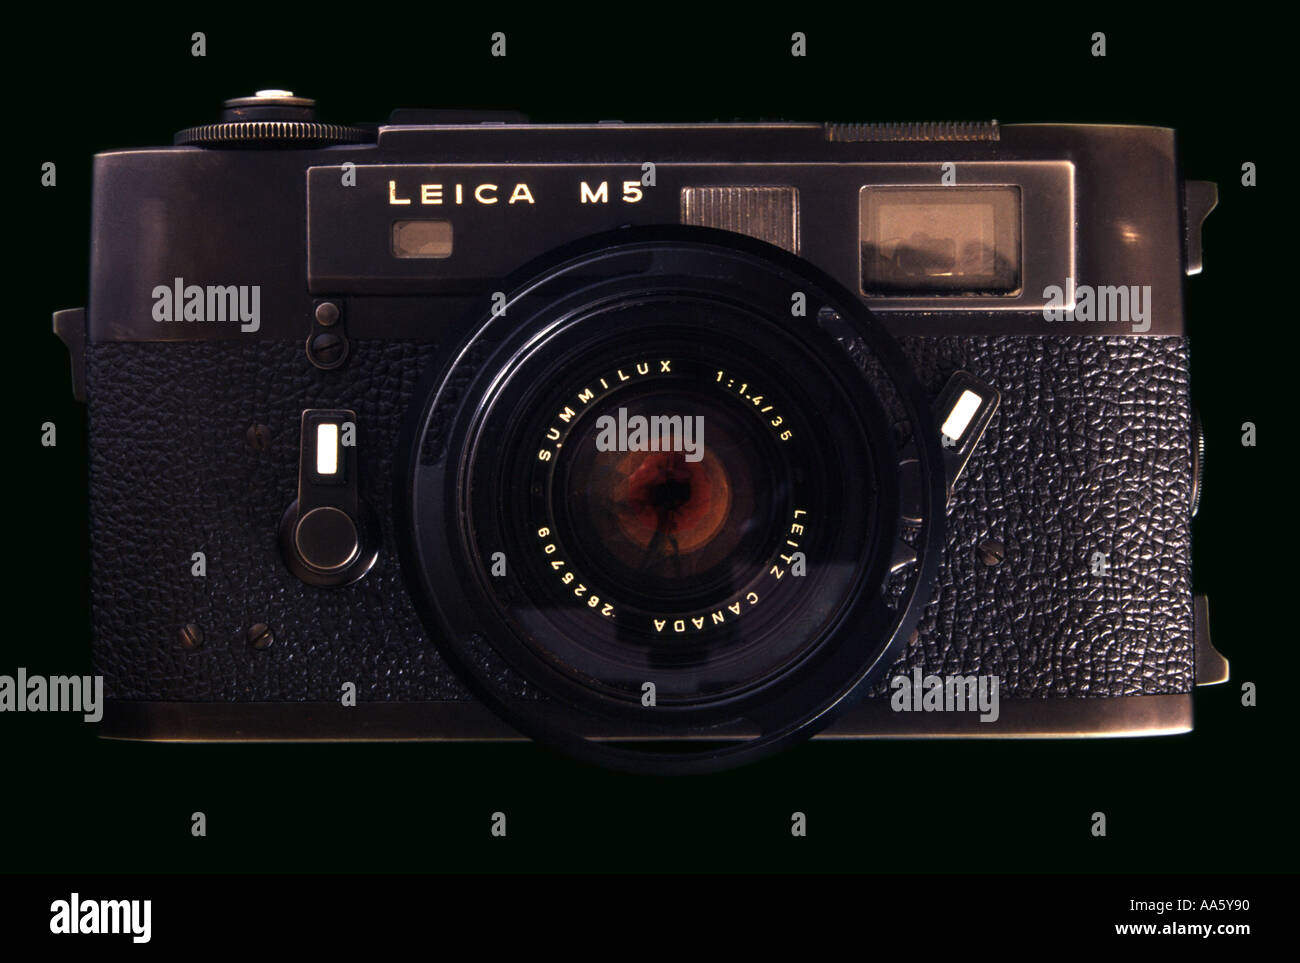 Leica M5 rangefinder camera Stock Photo